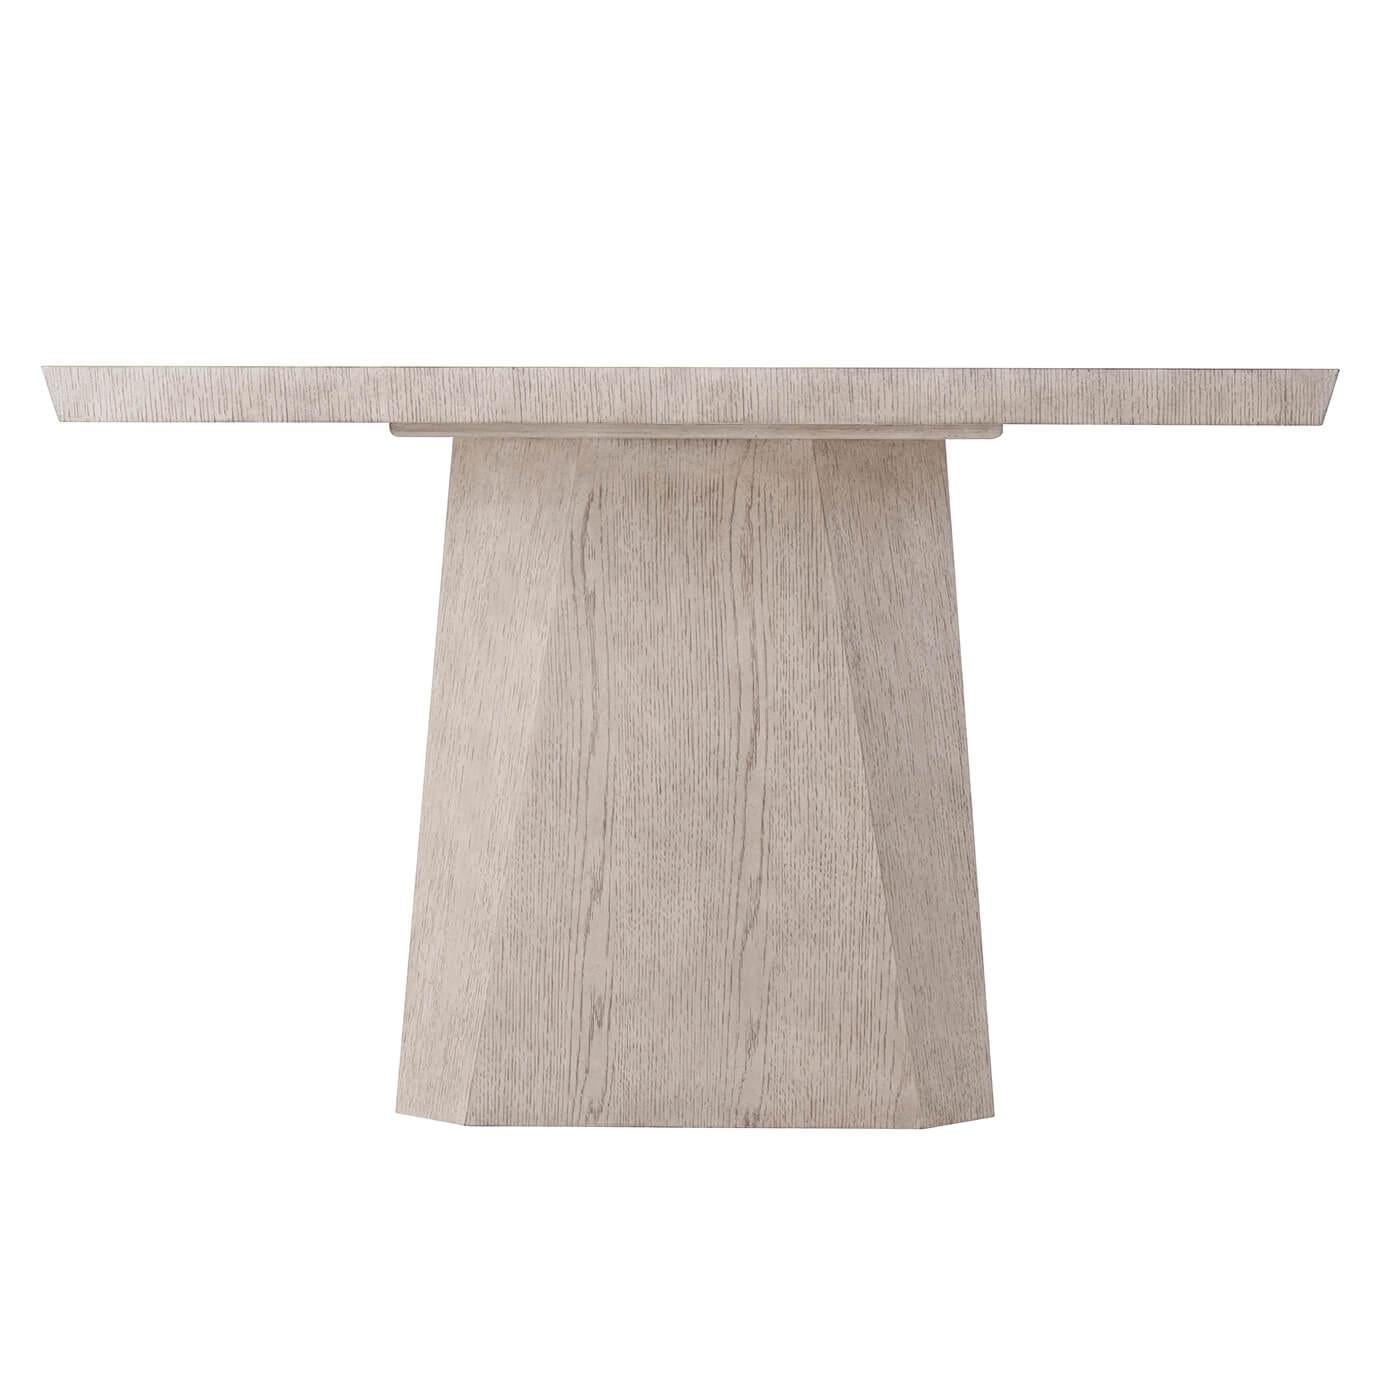 light oak table top